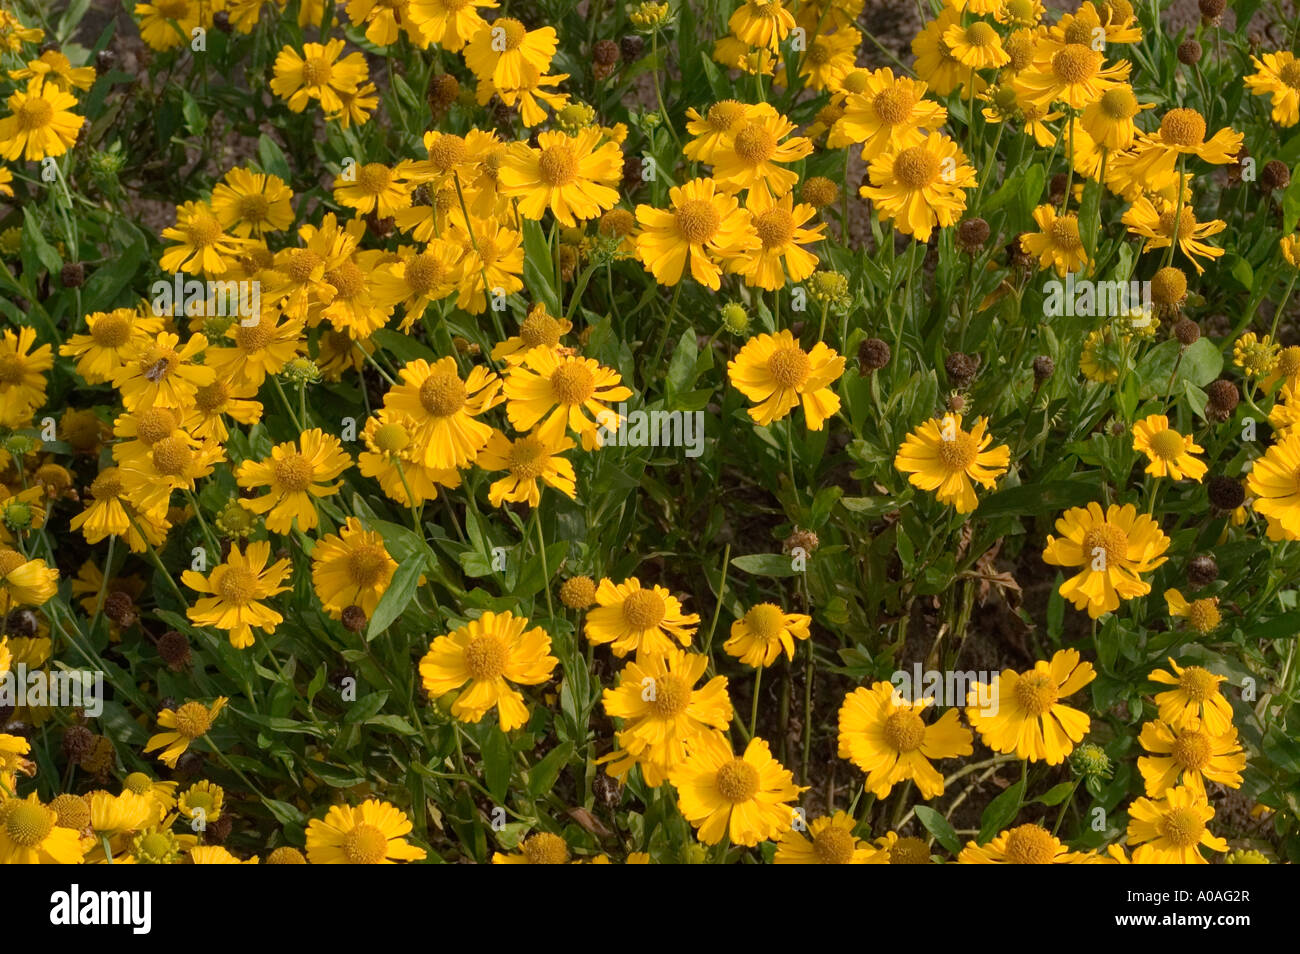 Many autumn yellow flowers of Common sneezeweed Asteraceae Helenium autumnale var Pumilum Magnificum Stock Photo